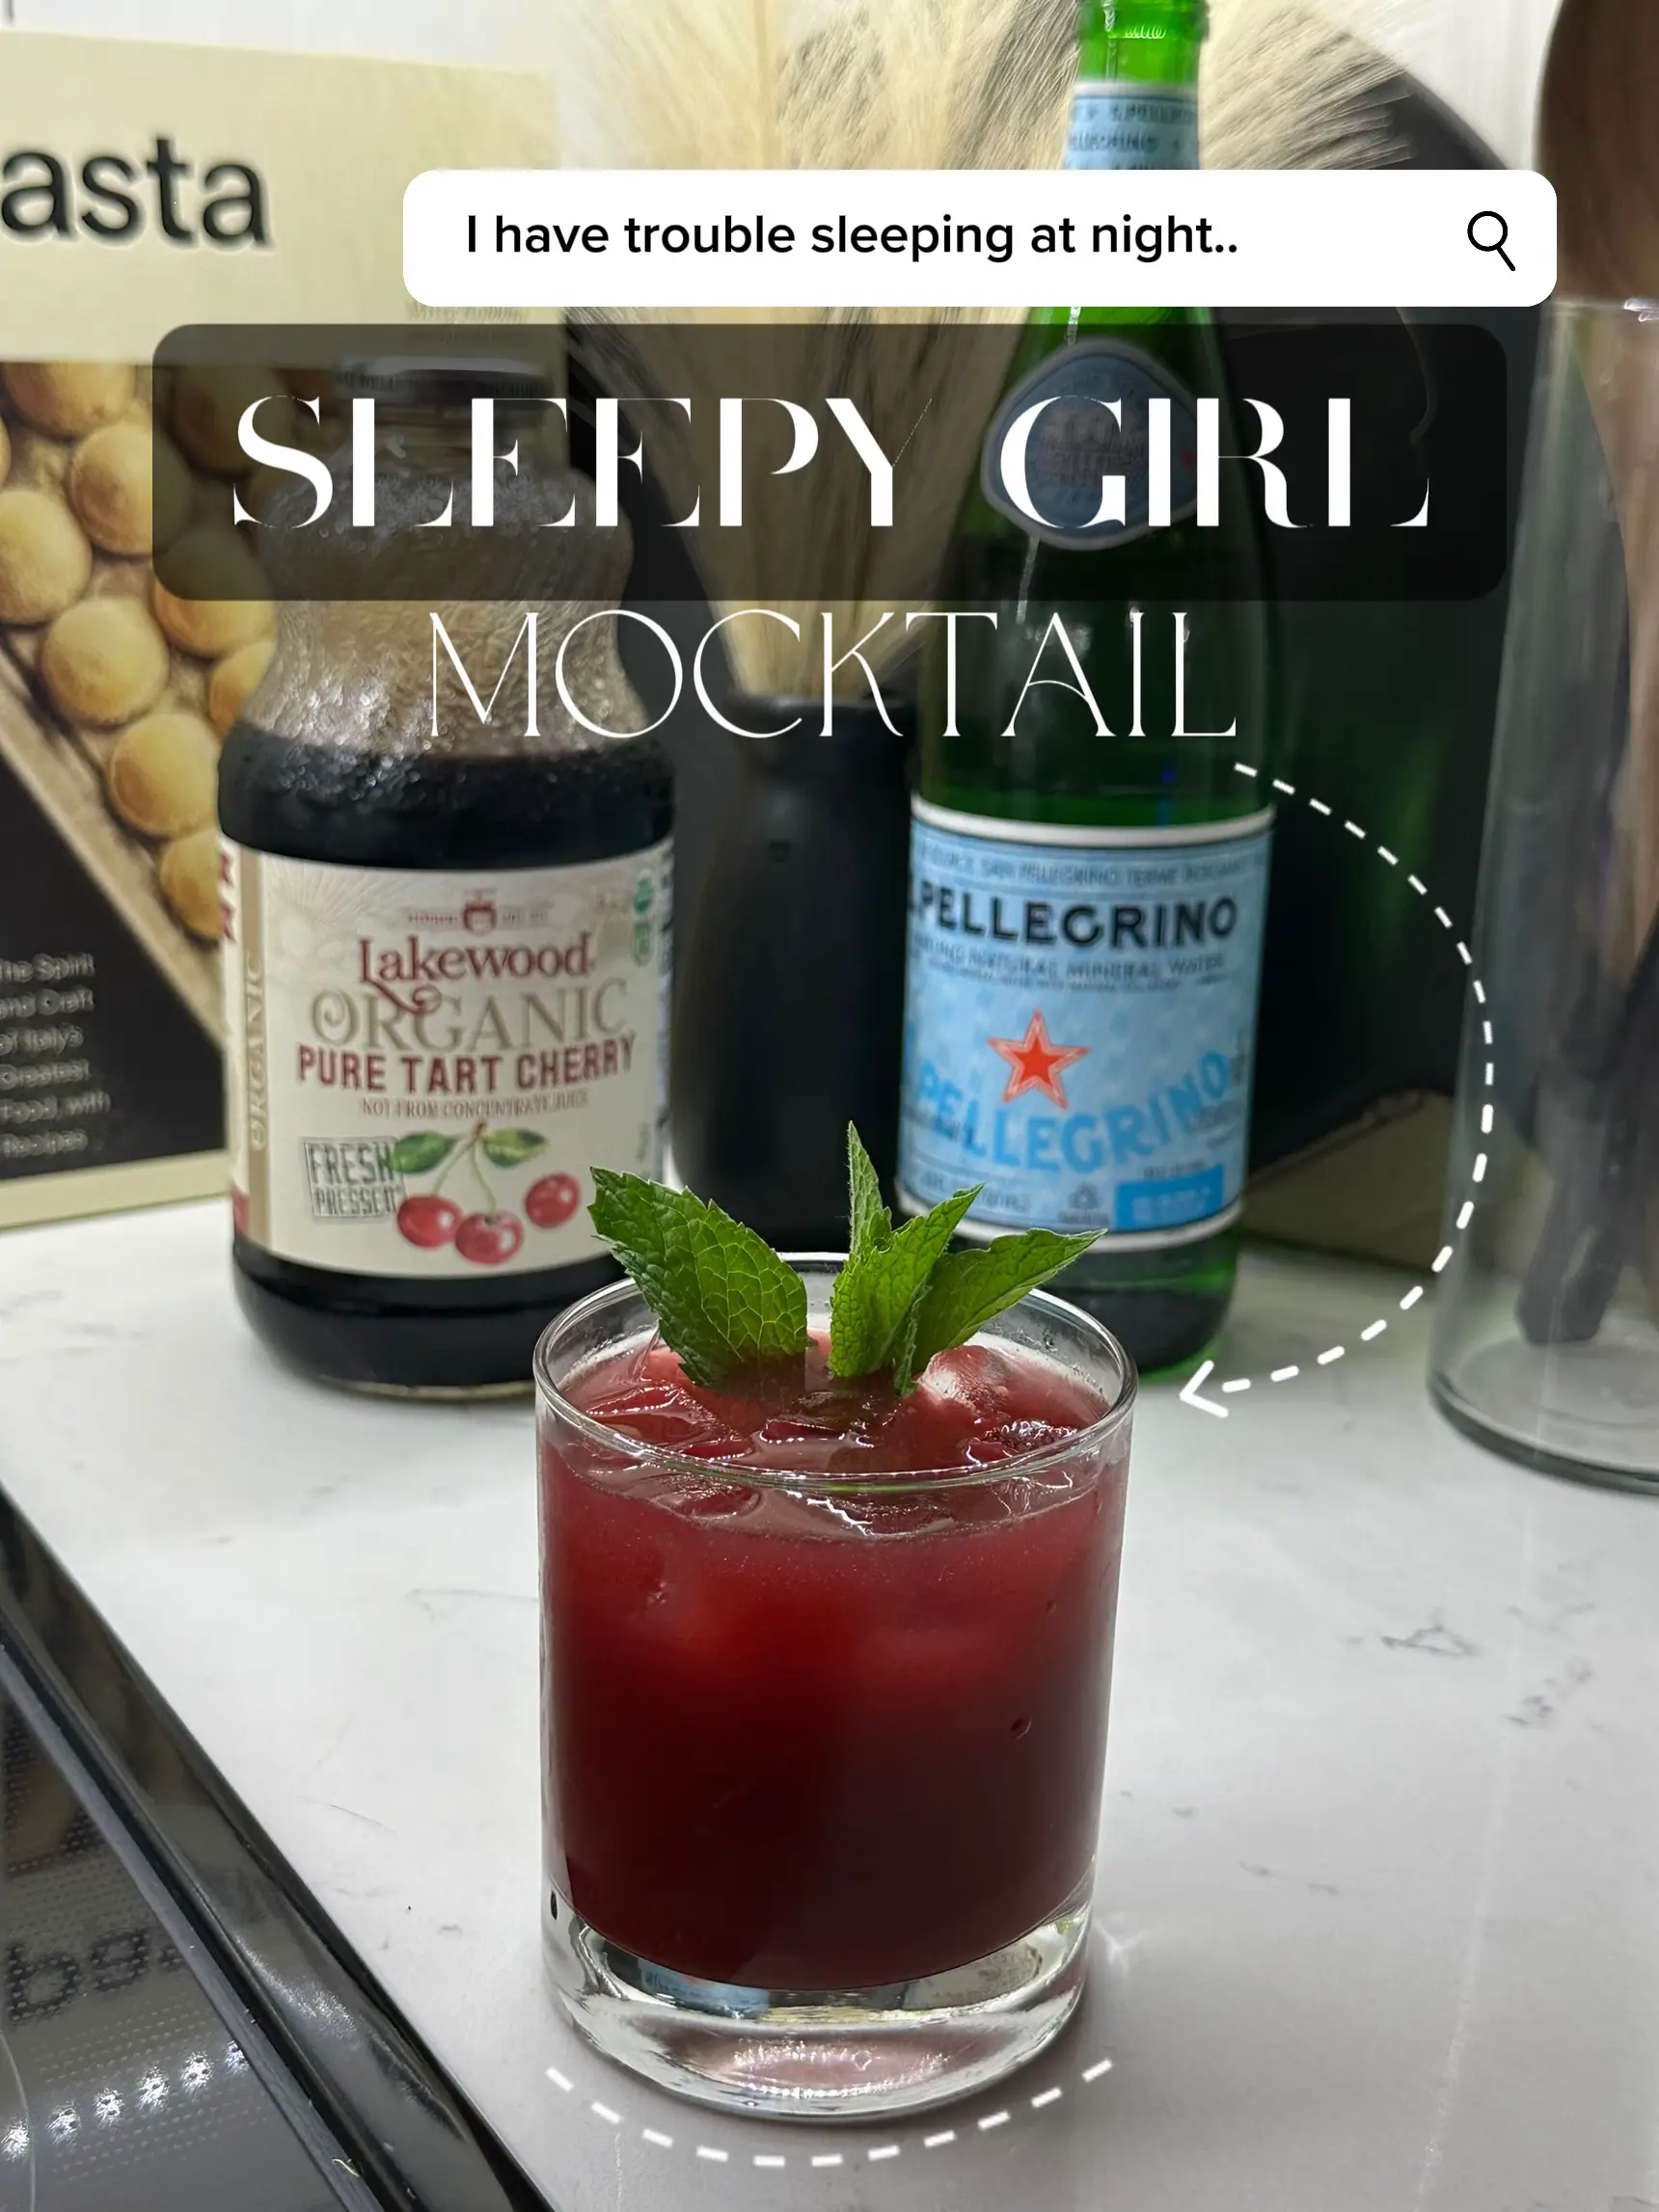 Sleepy girl mocktail': Can it actually help you fall sleep?